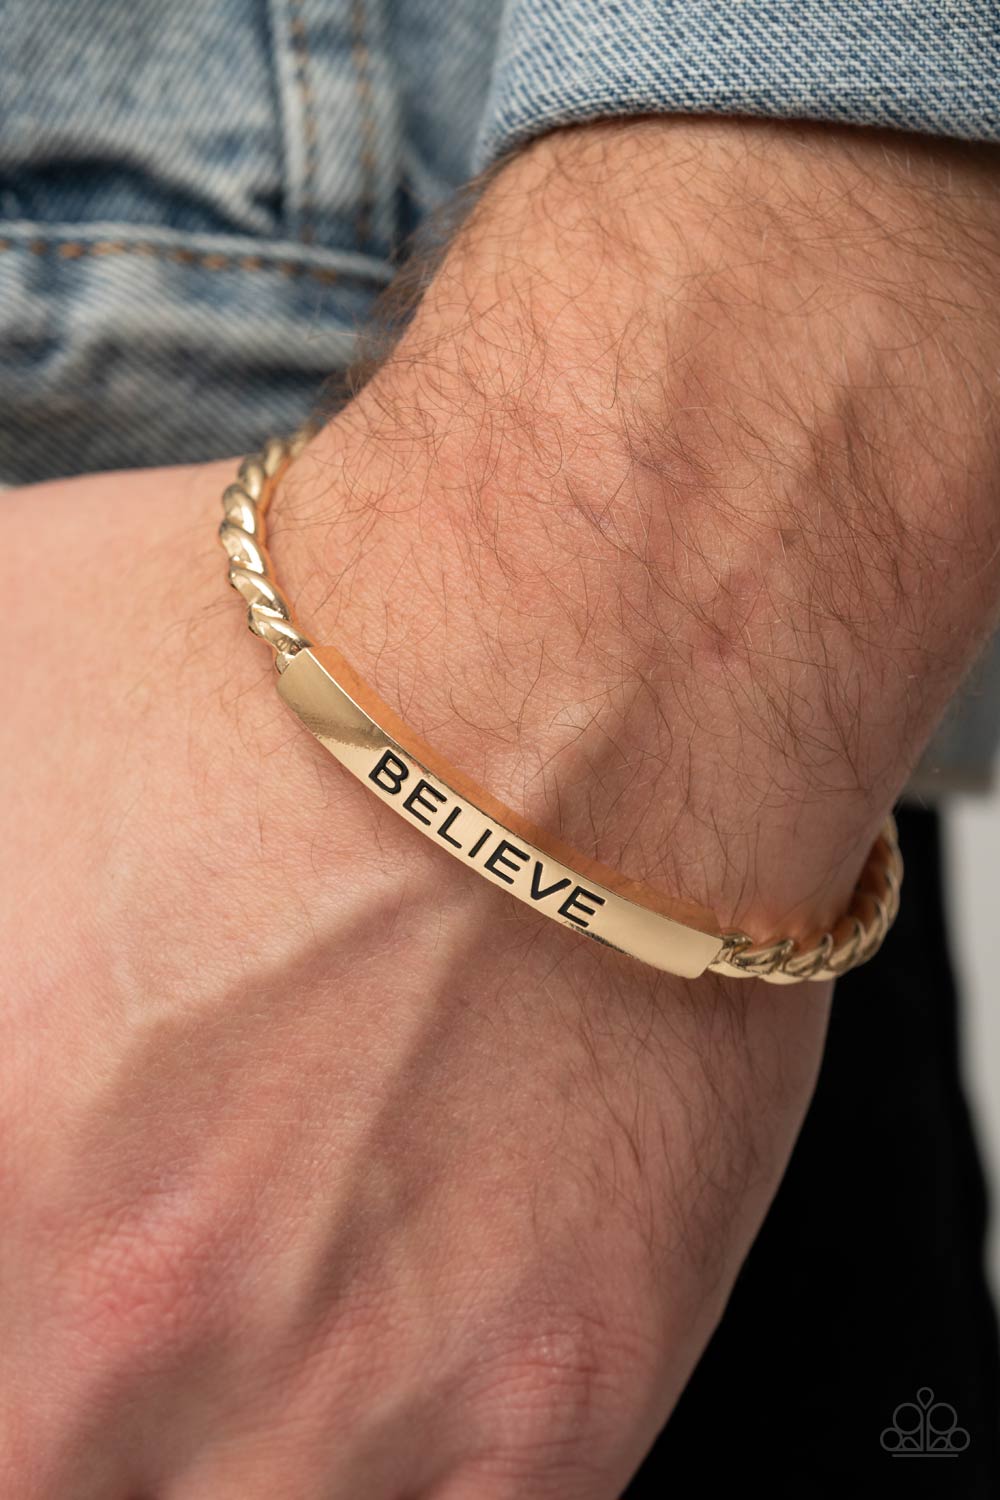 Keep Calm and Believe - Gold cuff bracelet